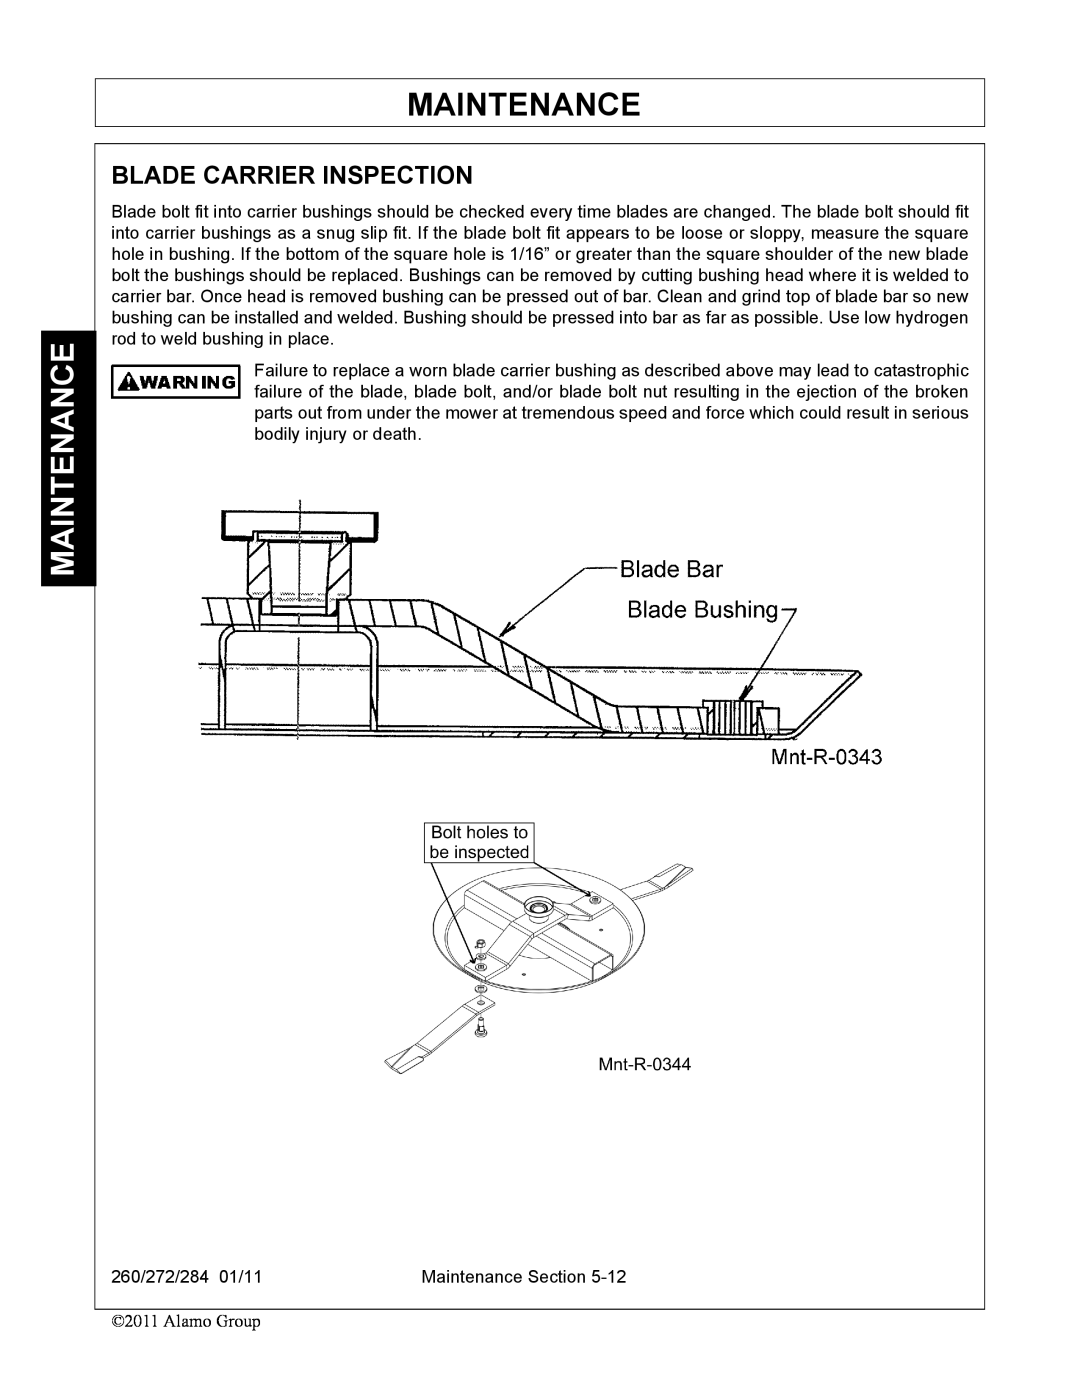 Alamo 260, 284, 272 manual Blade Carrier Inspection, Maintenance 